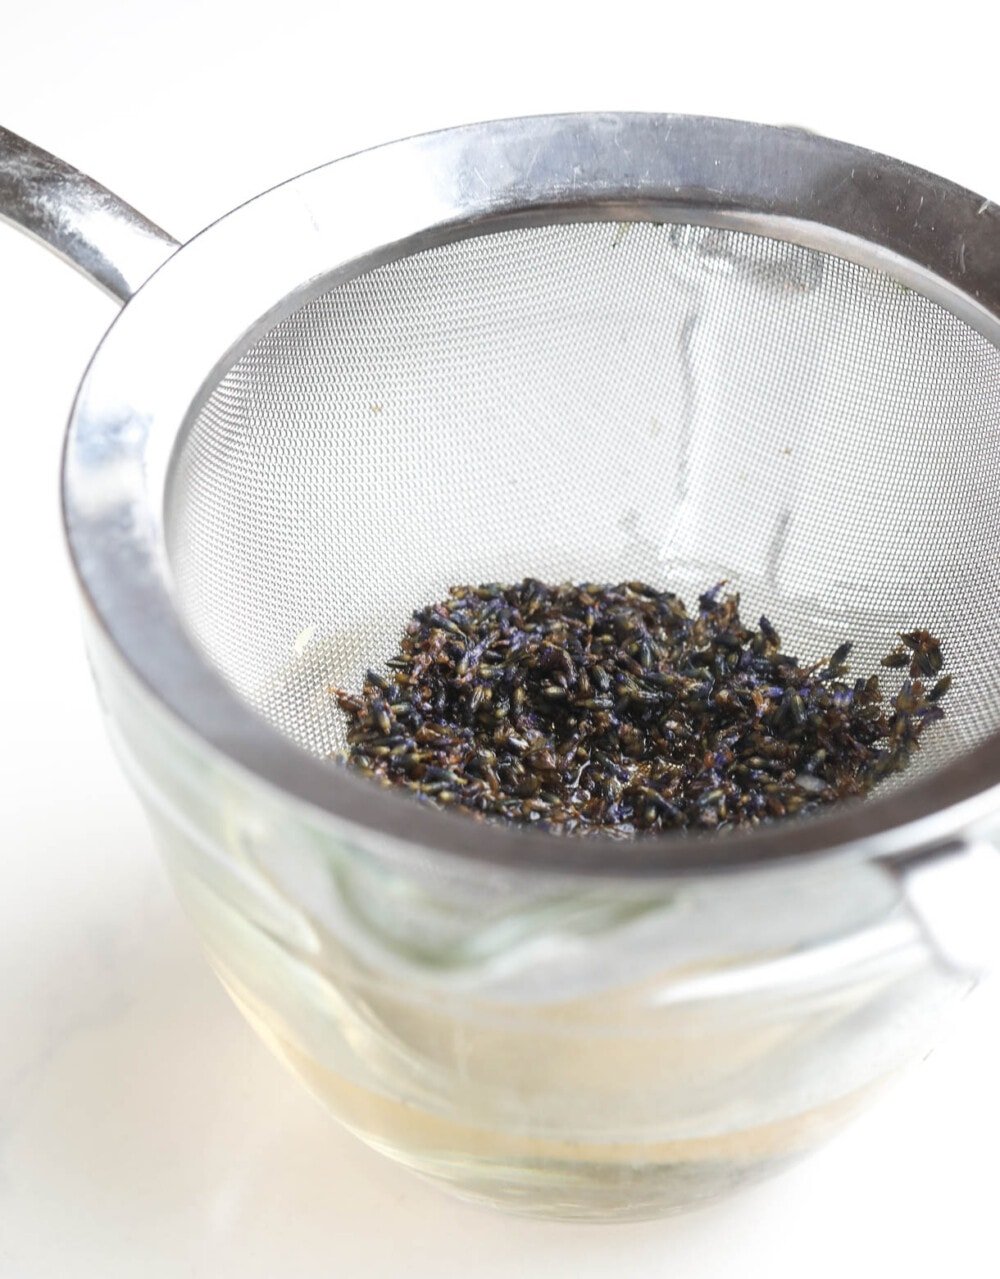 straining lavender buds into a glass bowl